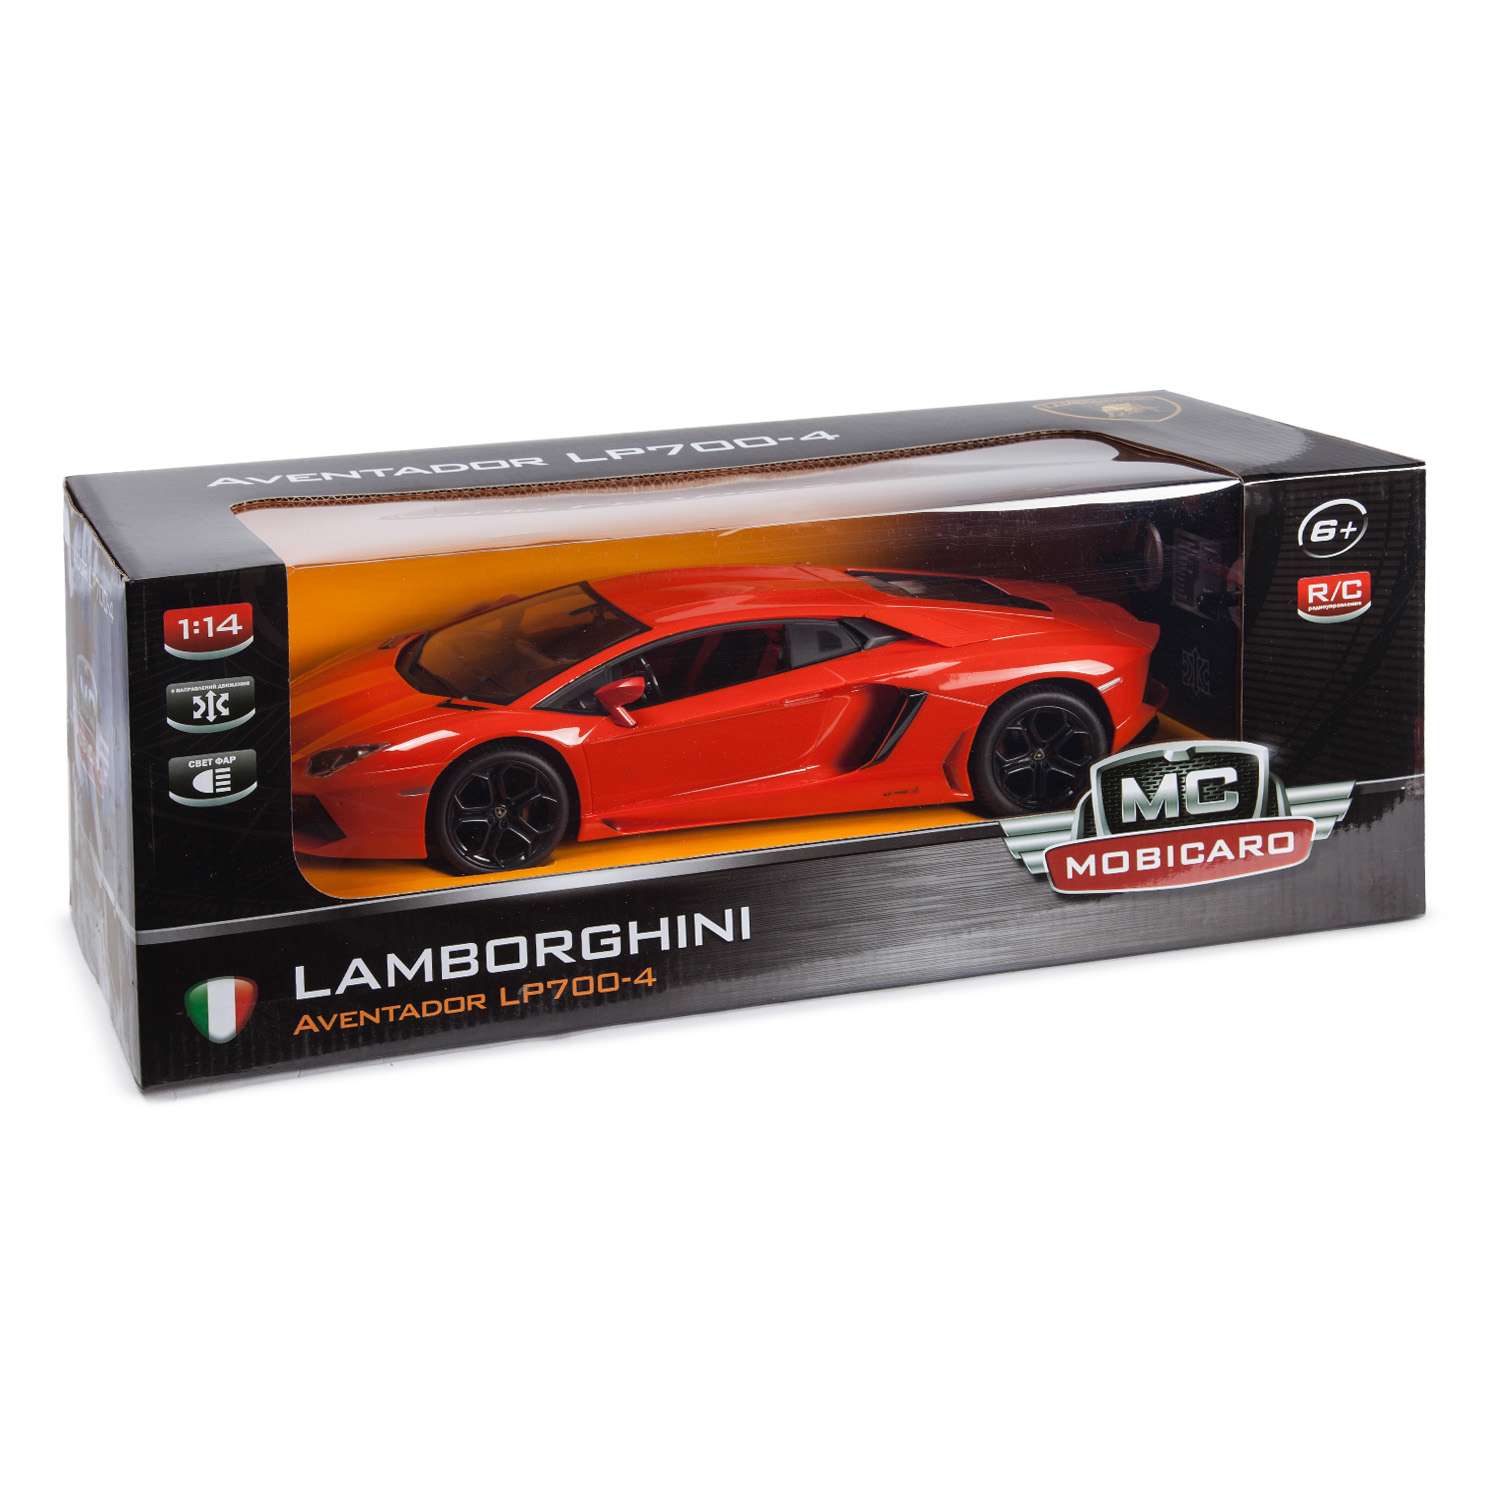 Mашина р/у Mobicaro Lamborghini LP700 1:14 в асс - фото 3